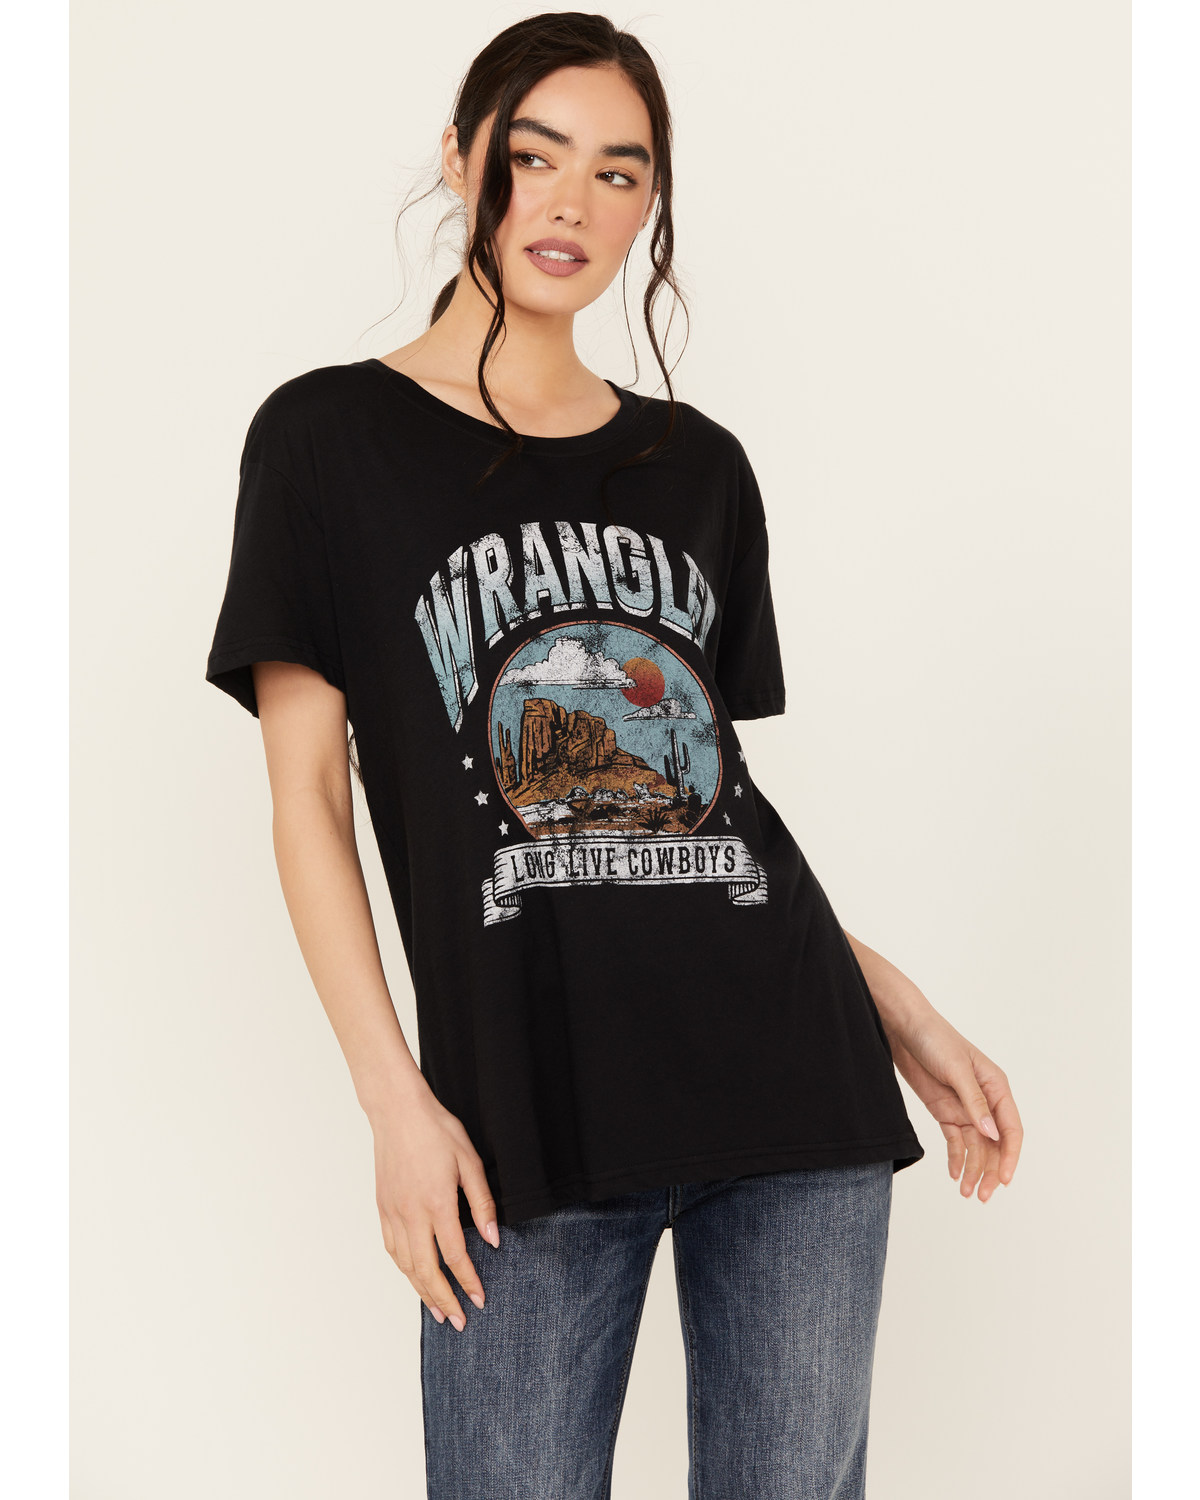 Wrangler Retro Women's Long Live Cowboys Short Sleeve Boyfriend Graphic Tee